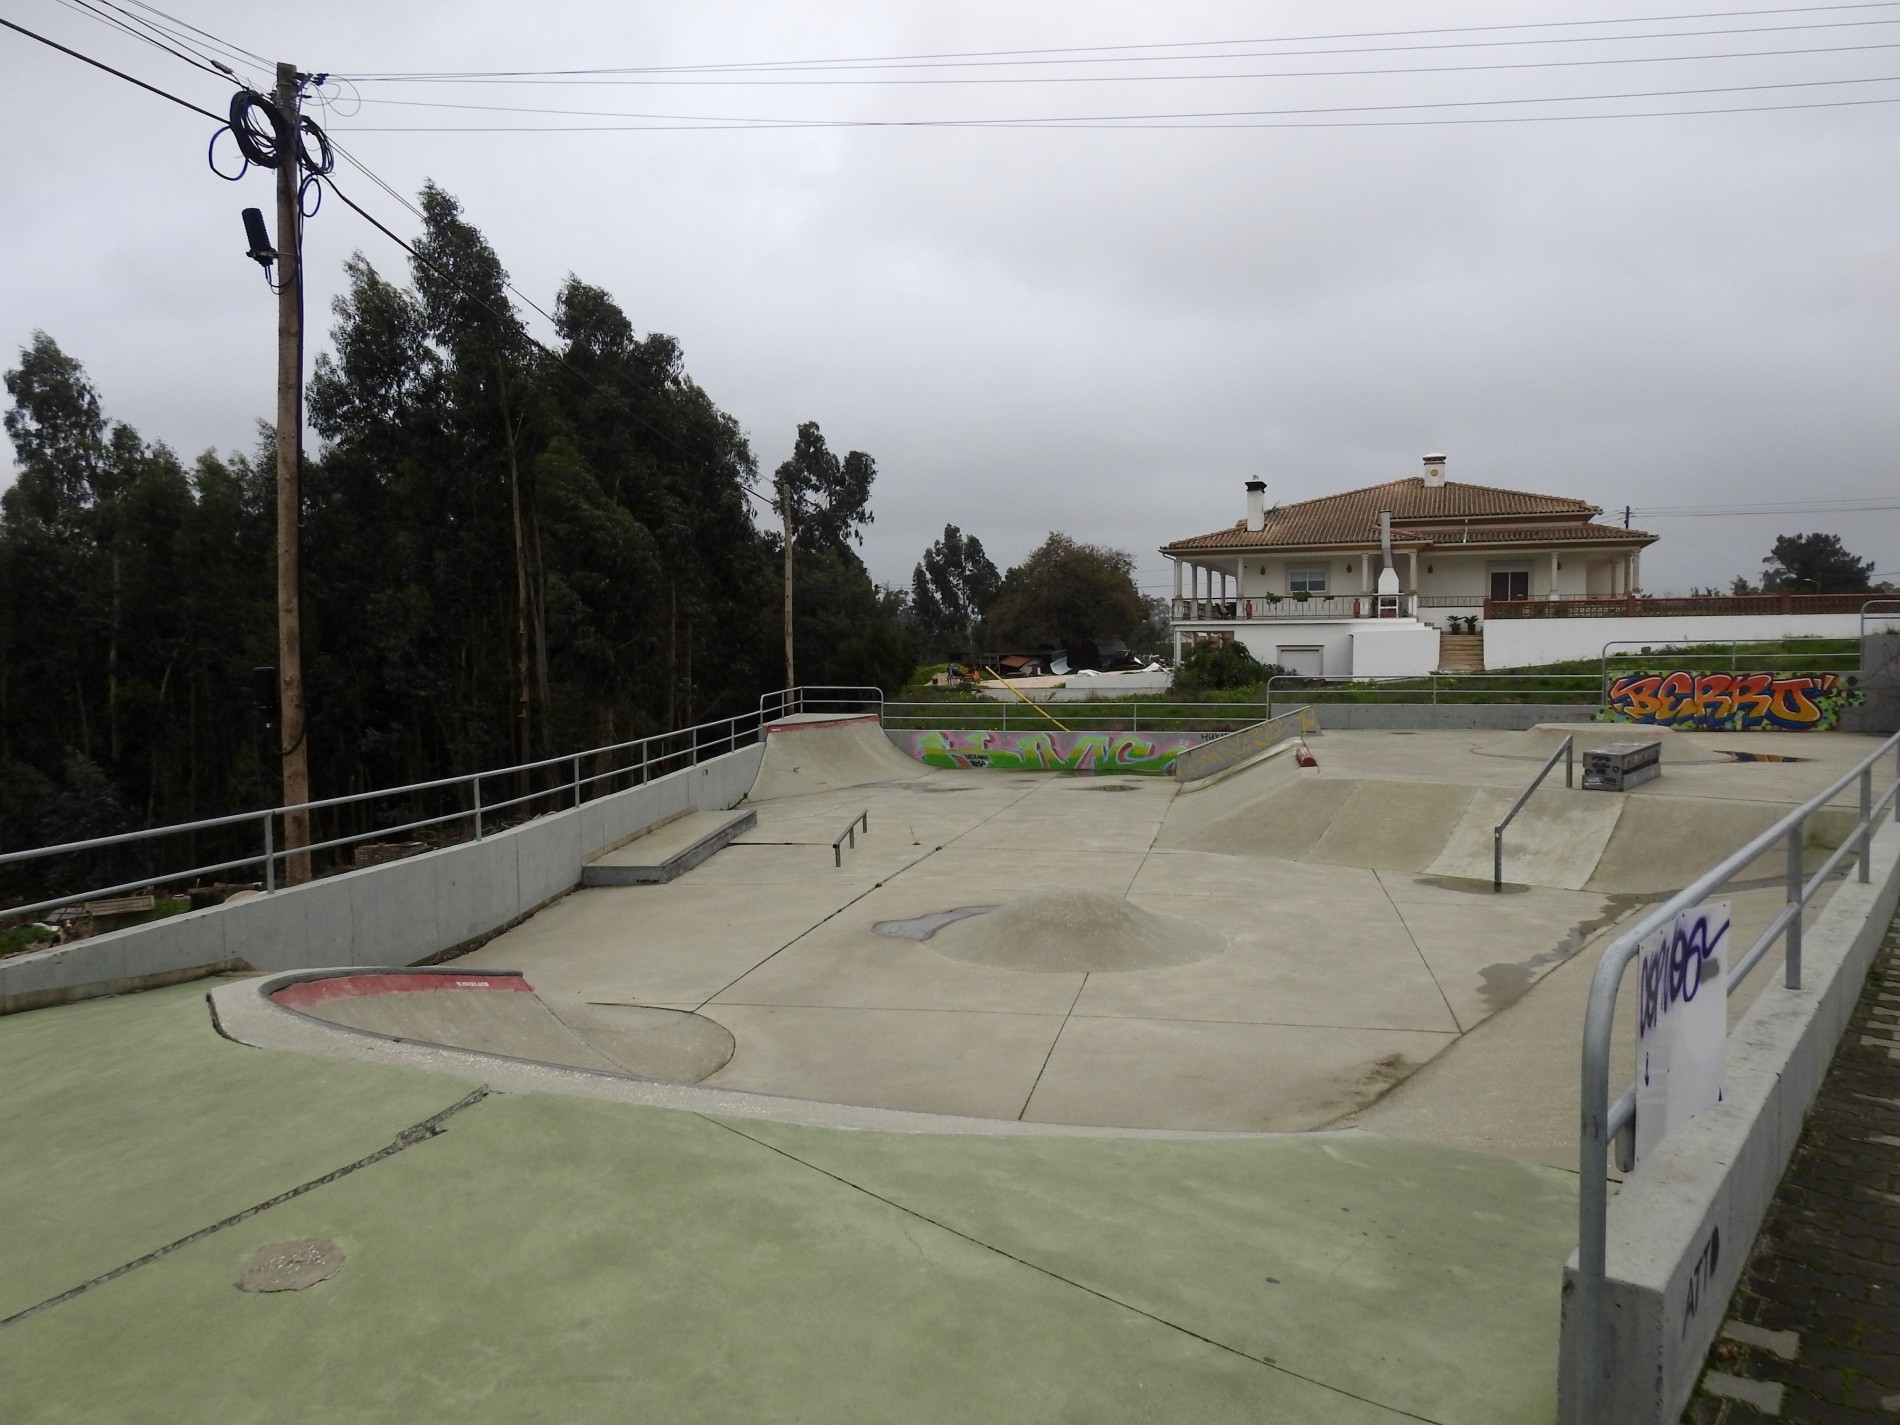 Figueiras skatepark